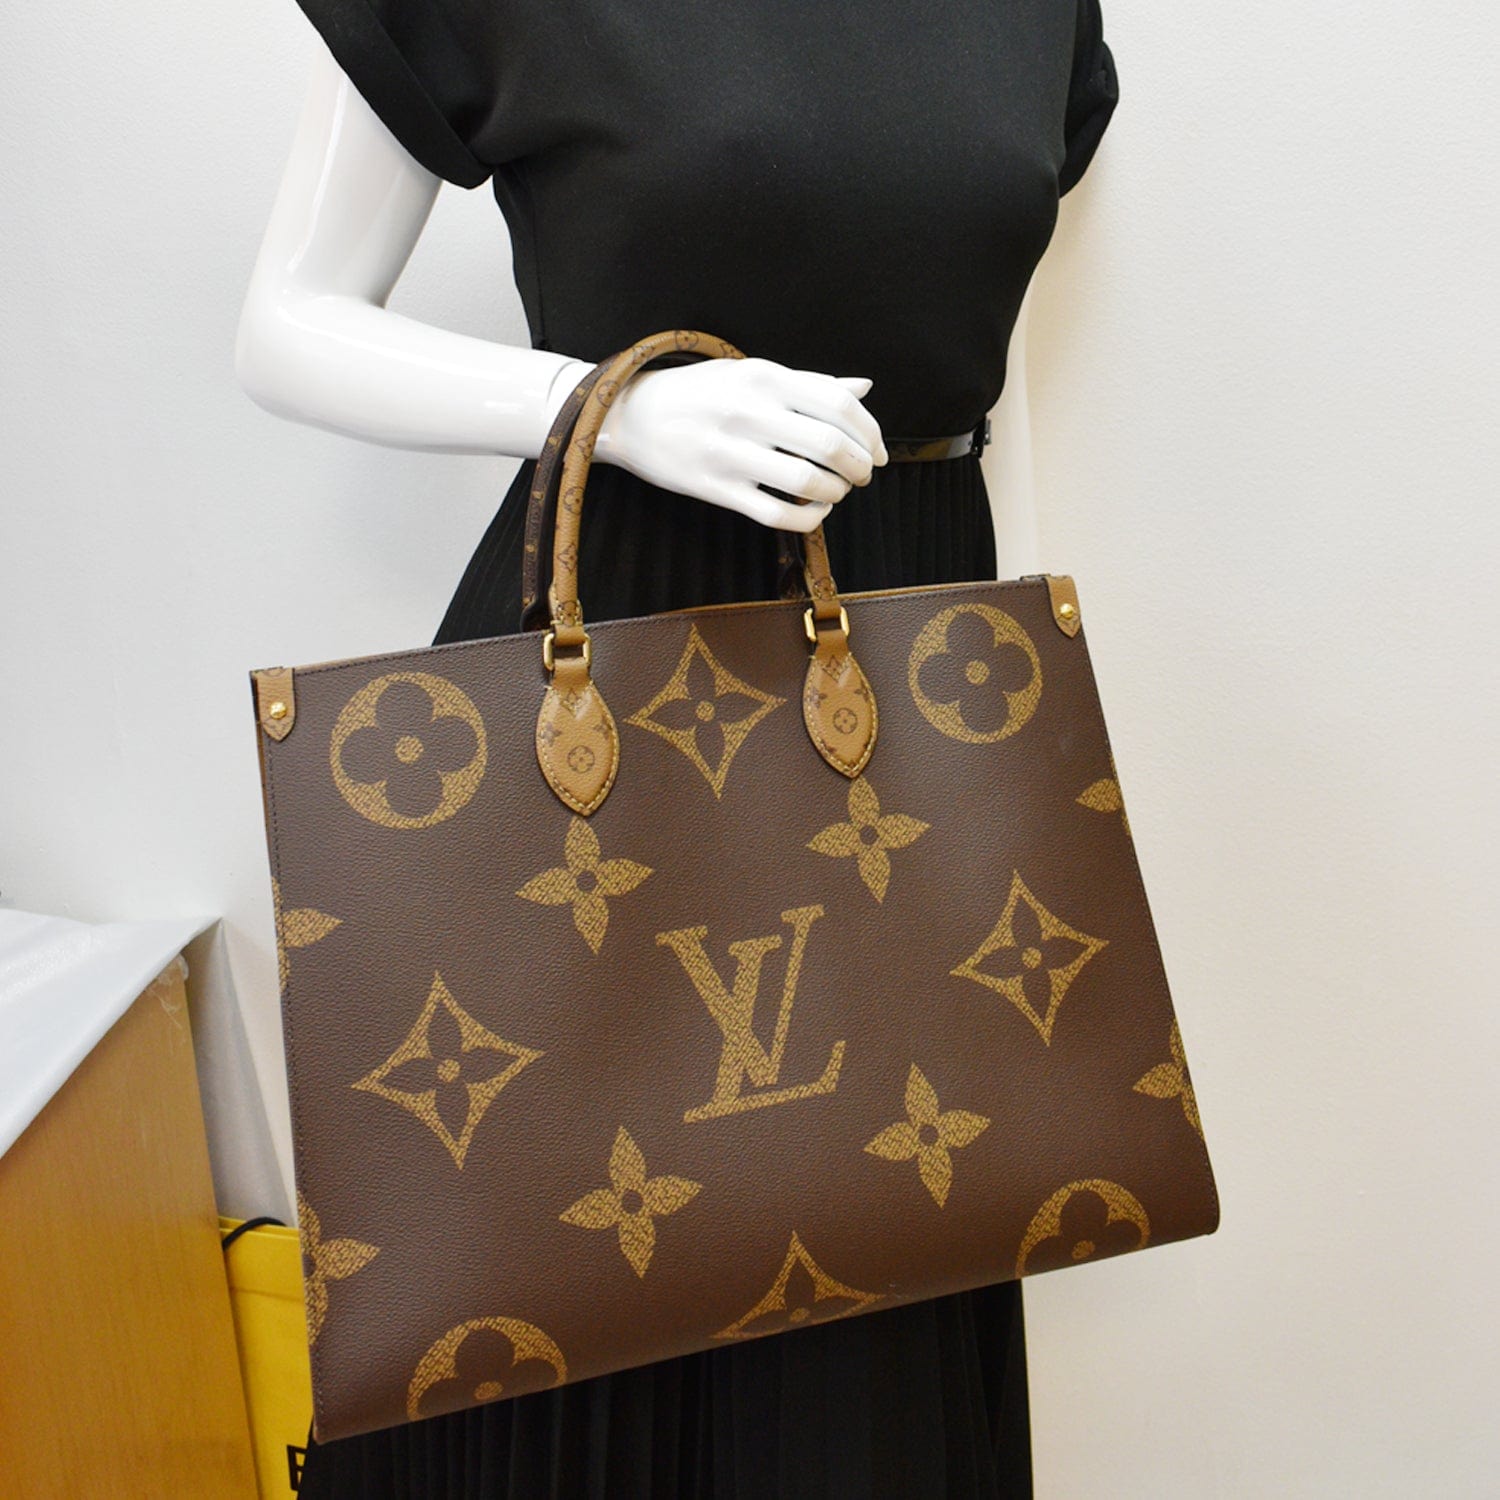 Louis Vuitton - Onthego GM Tote Bag - Monogram Canvas - Women - Luxury